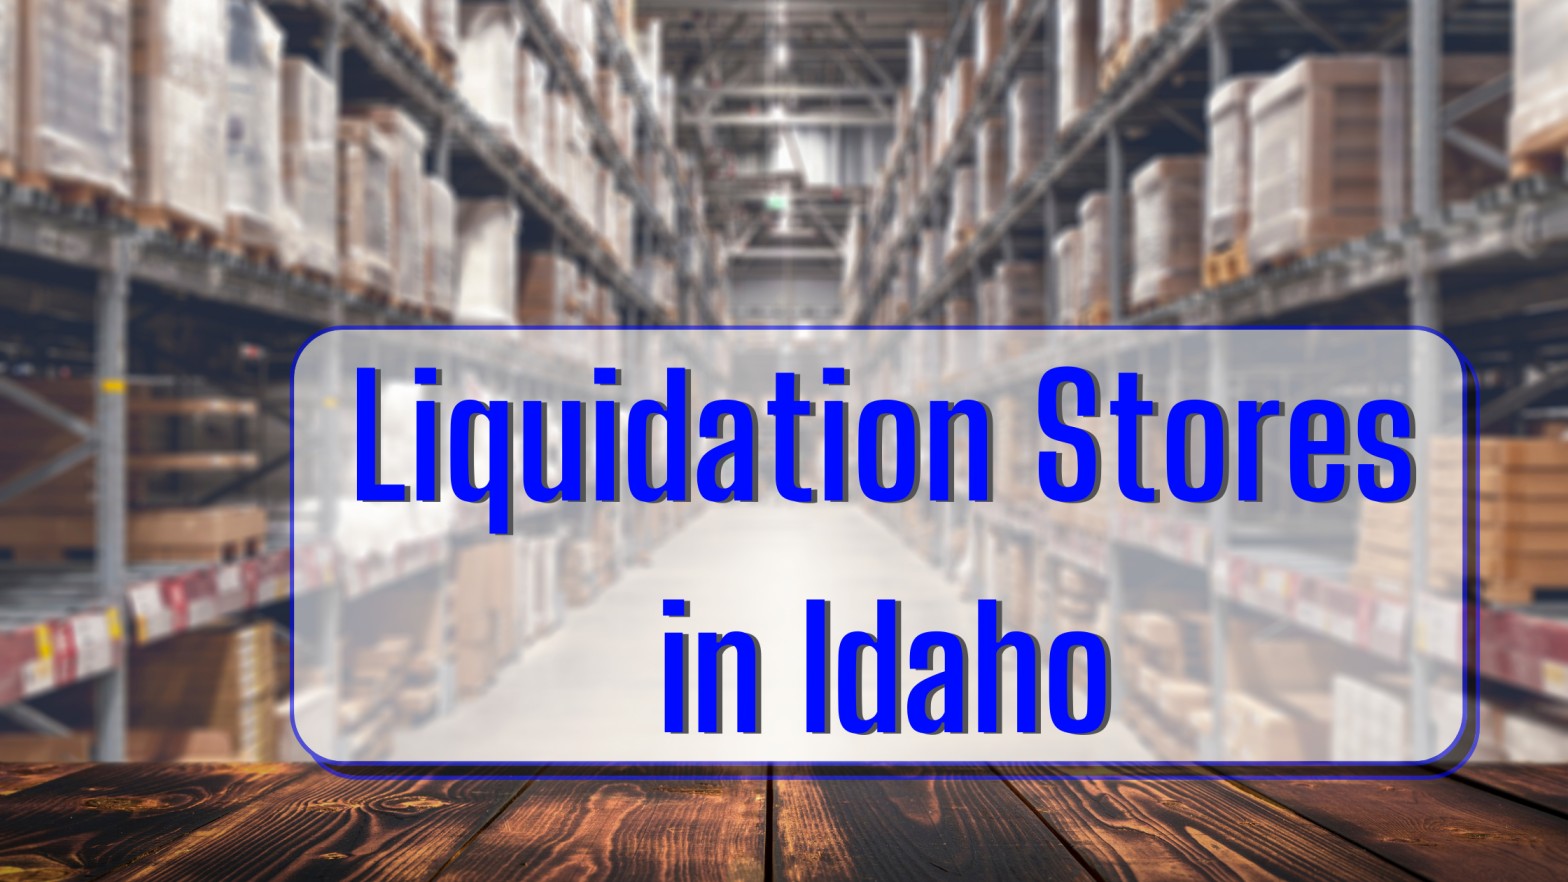 Liquidation Stores in Idaho